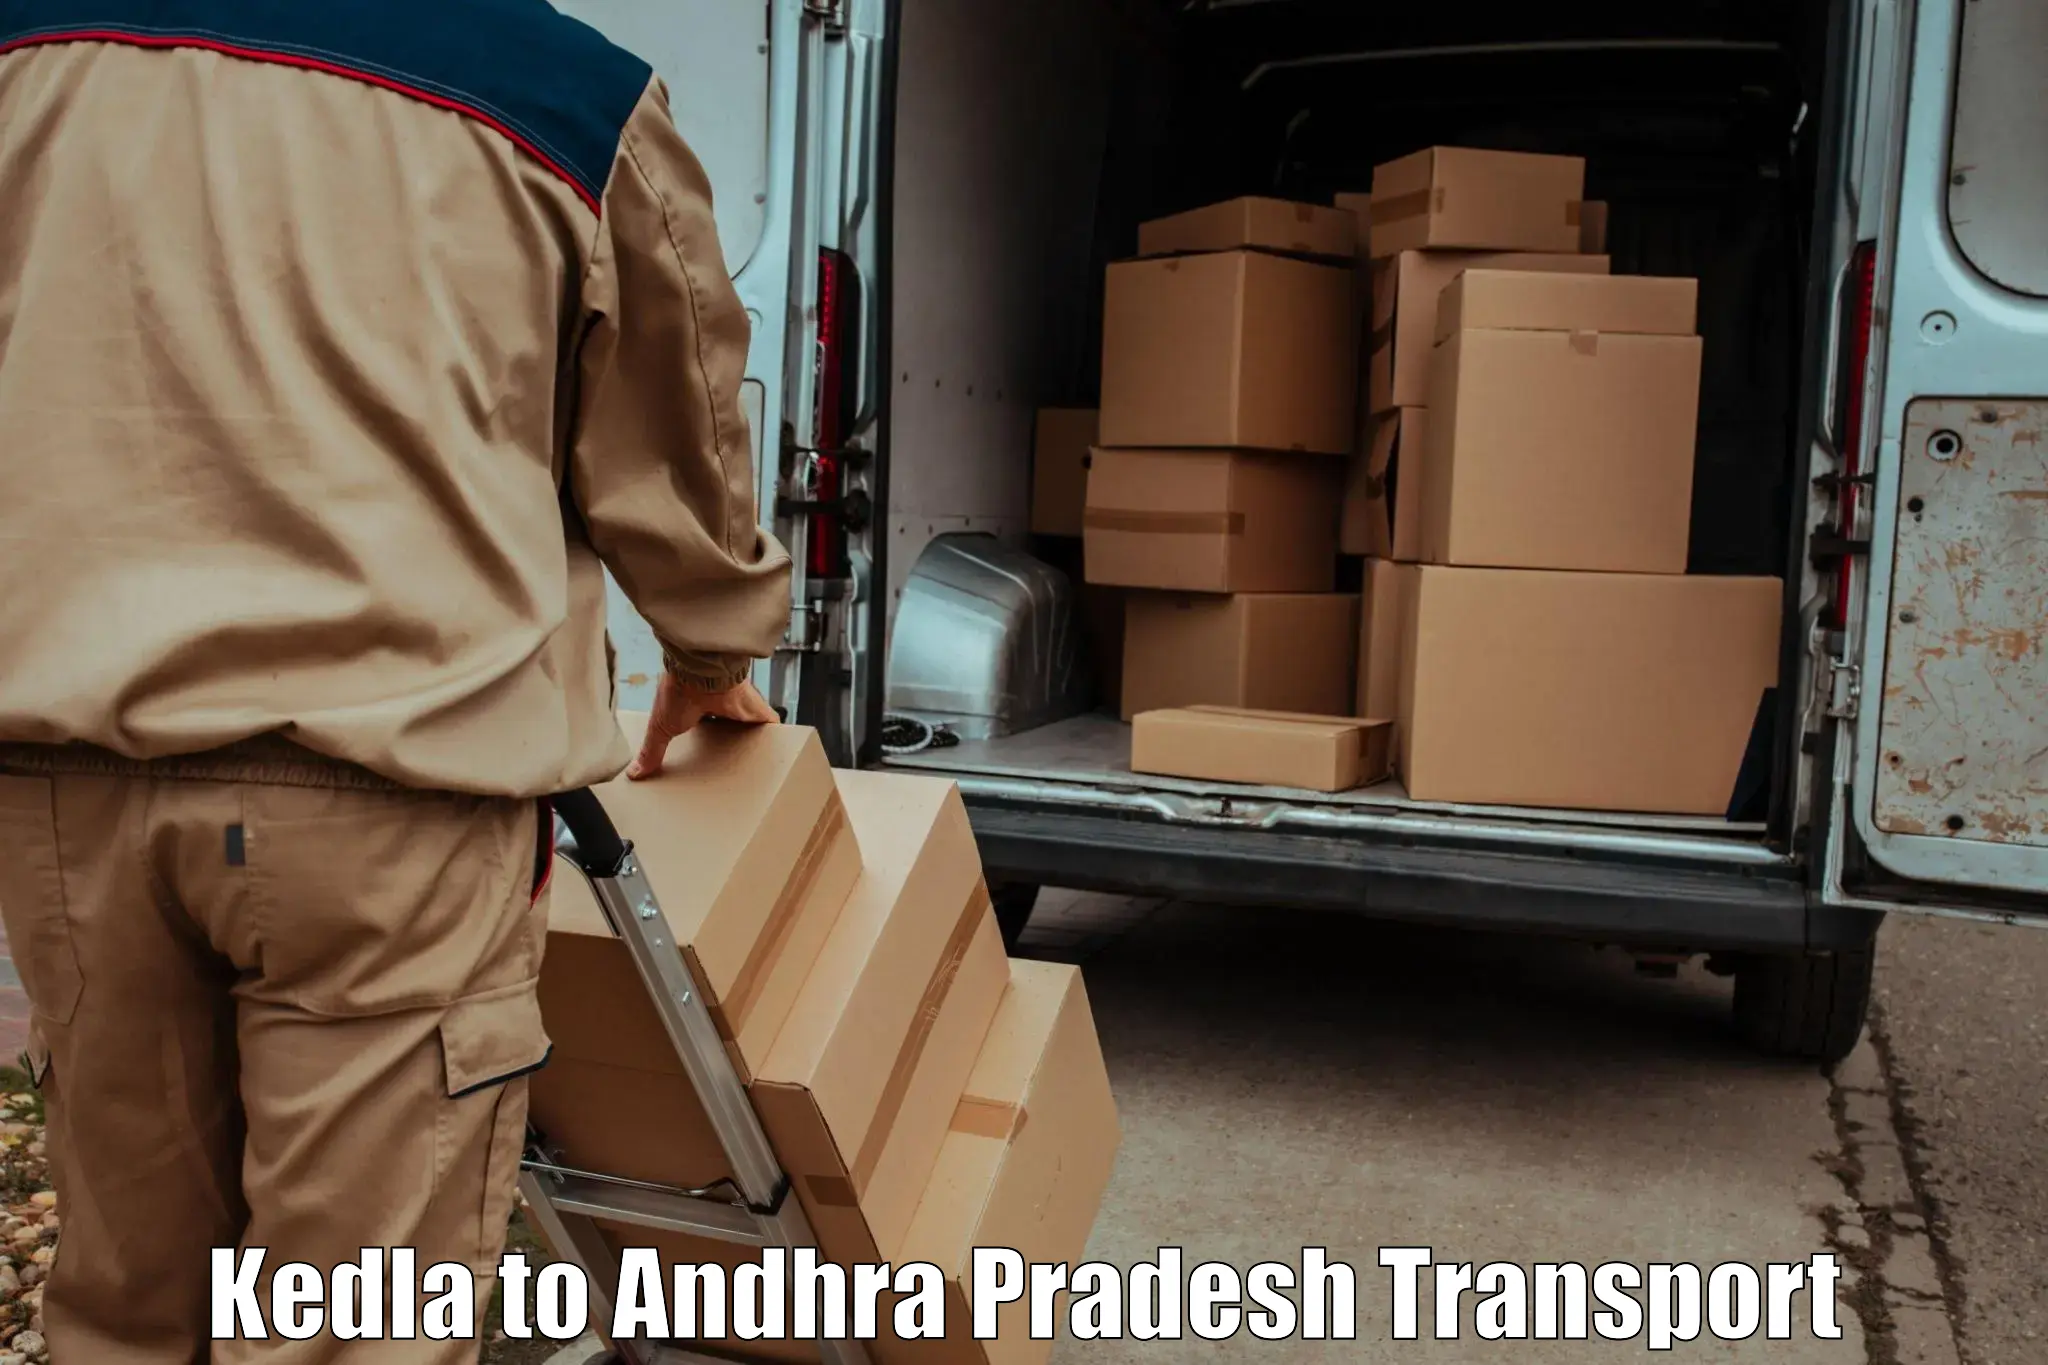 Container transport service Kedla to Pakala